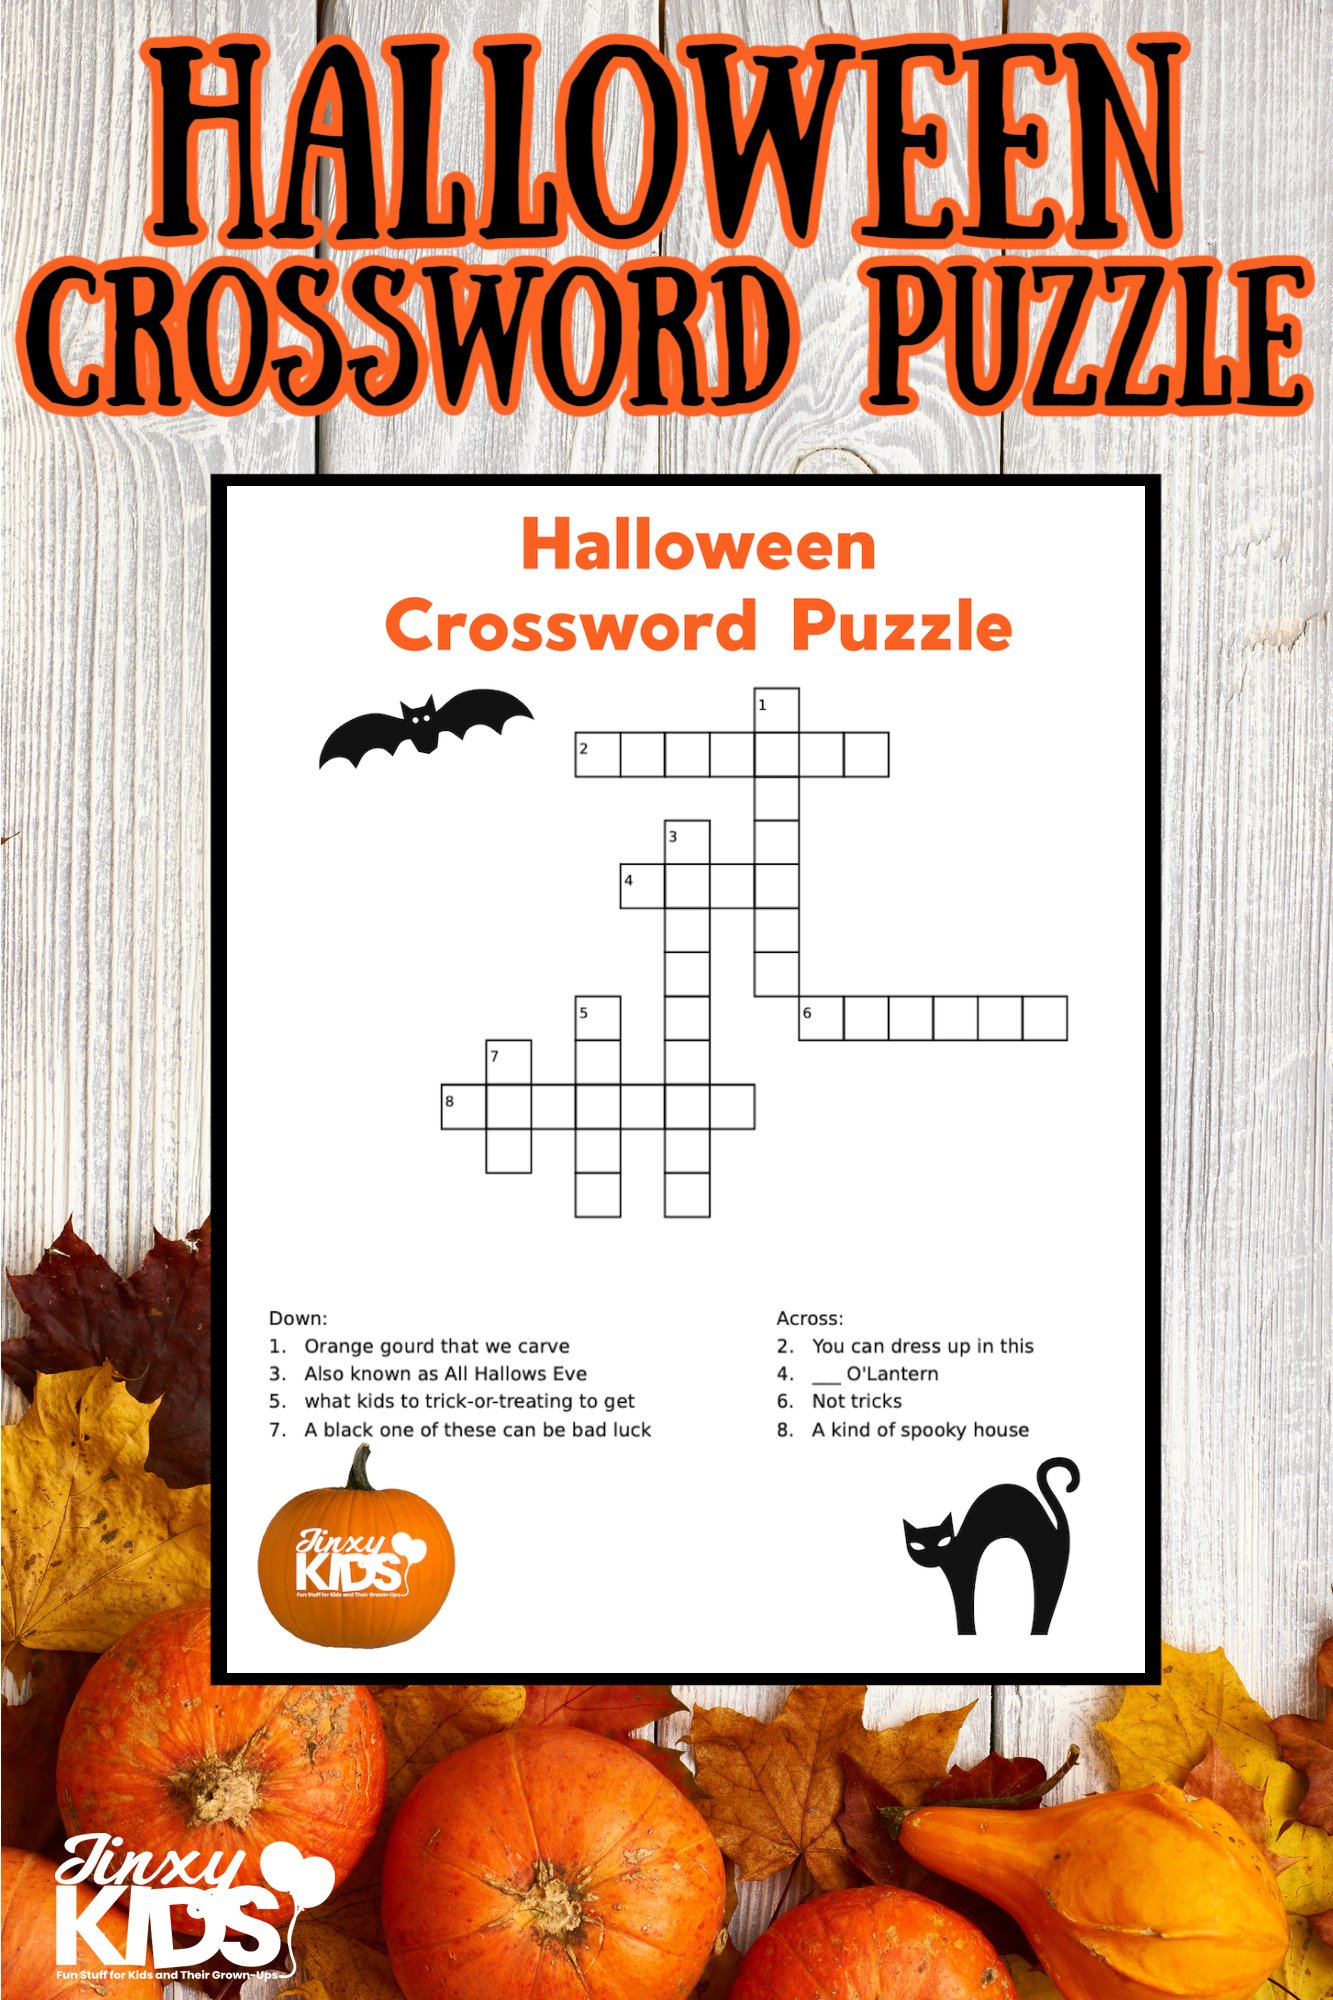 halloween-crossword-puzzle-for-kids-free-printable-jinxy-kids